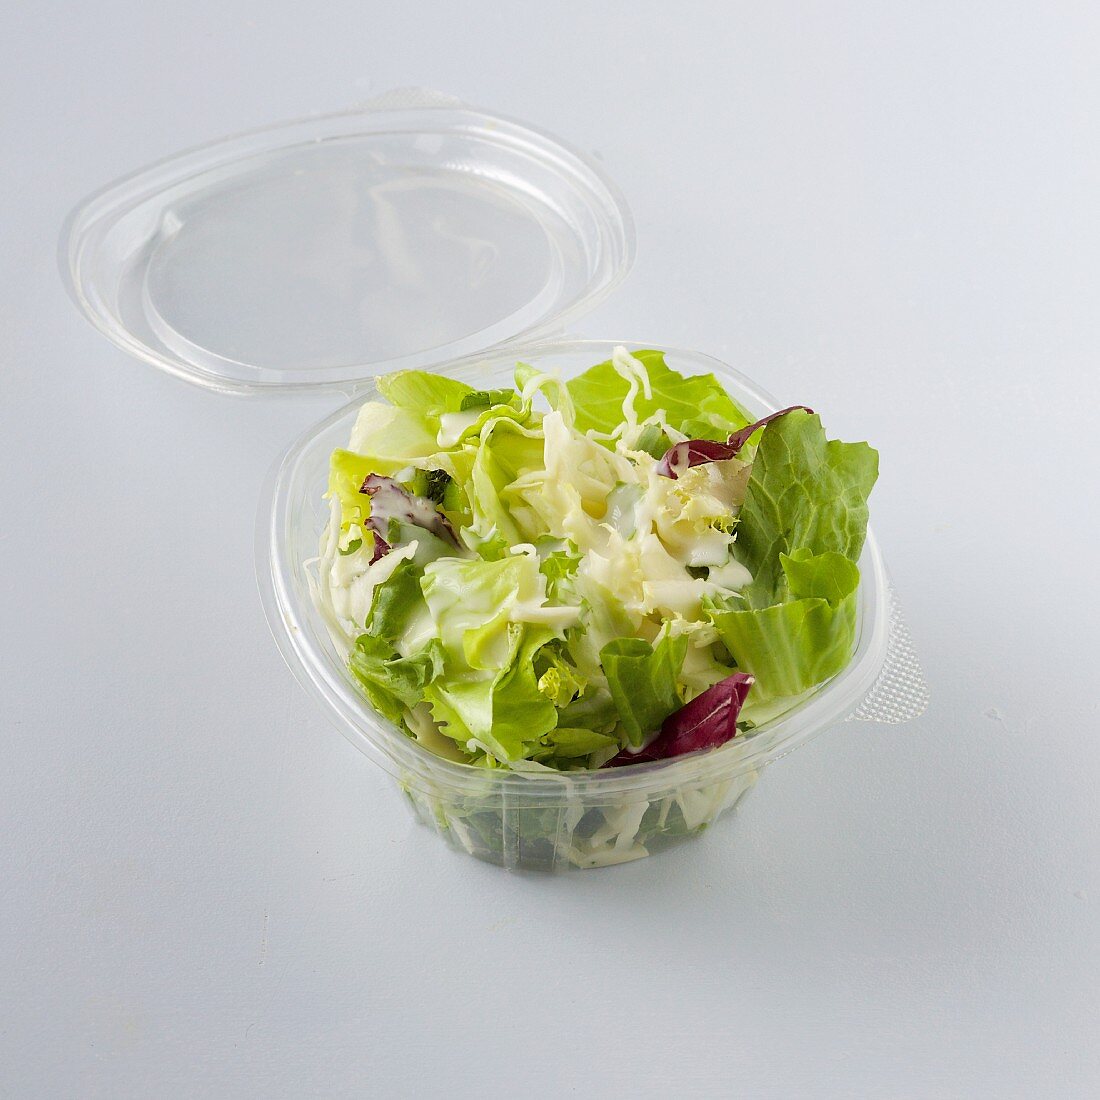 Blattsalat mit Kräuterdressing zum Mitnehmen